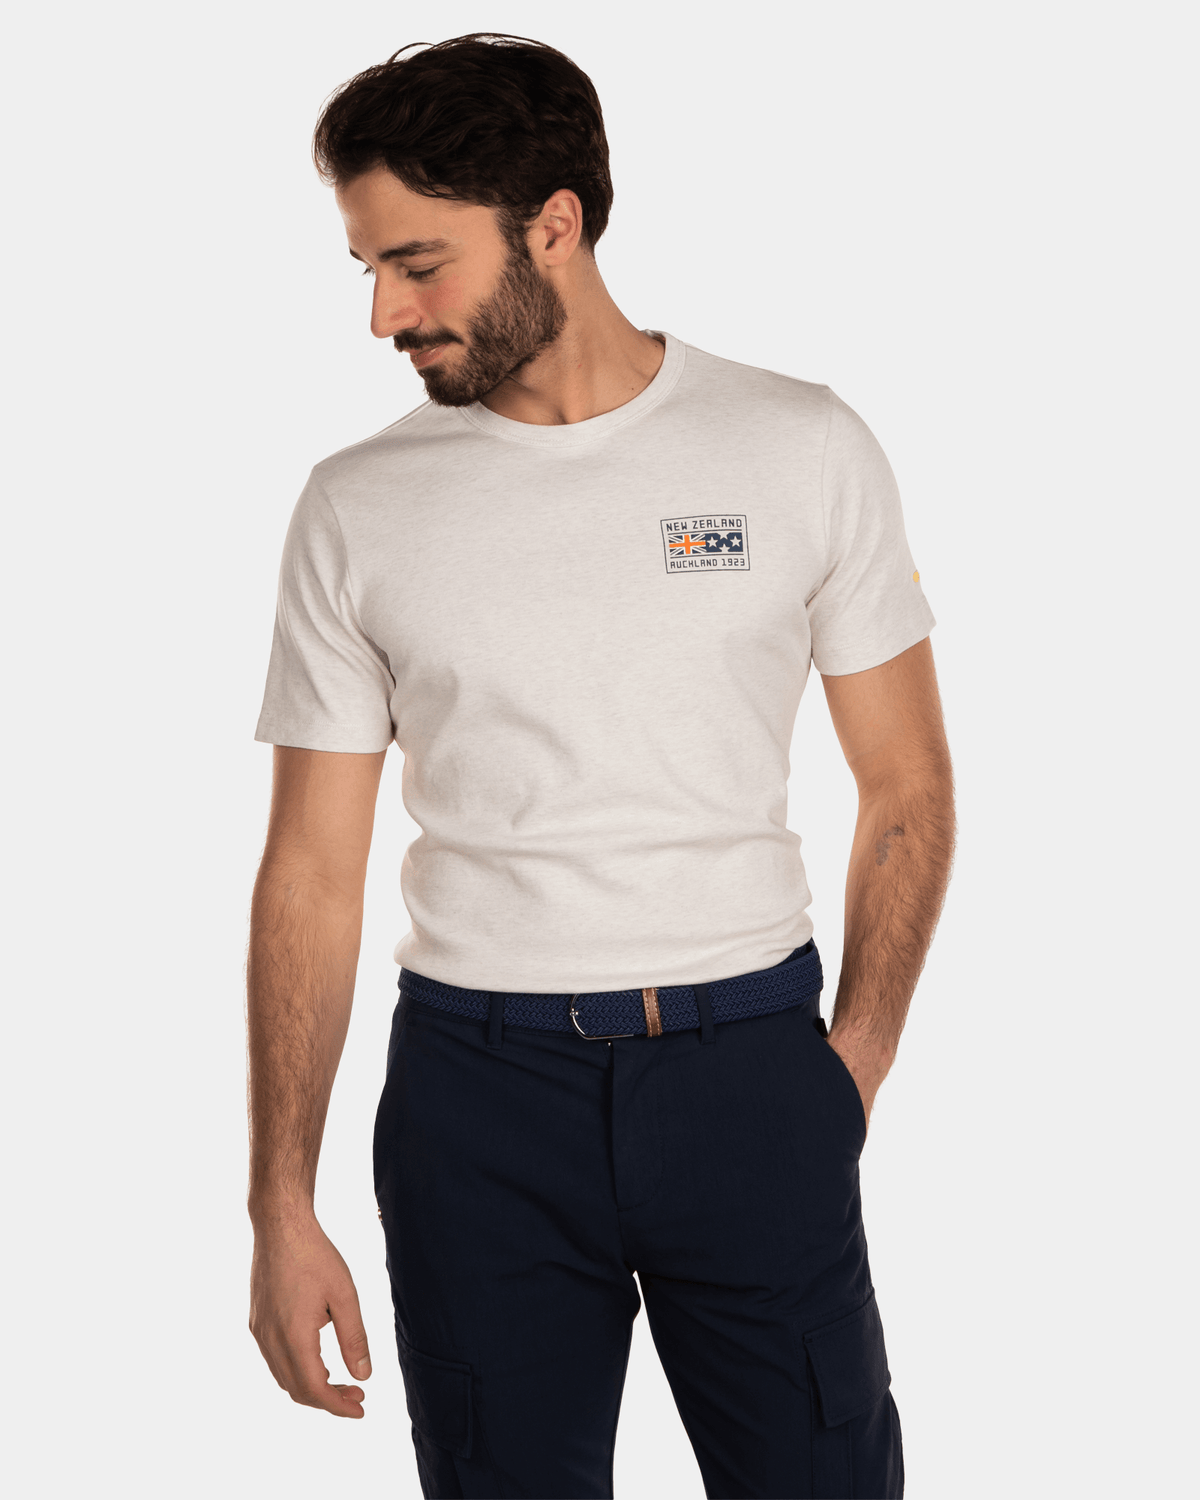 Cotton plain crew neck t-shirt - Cream